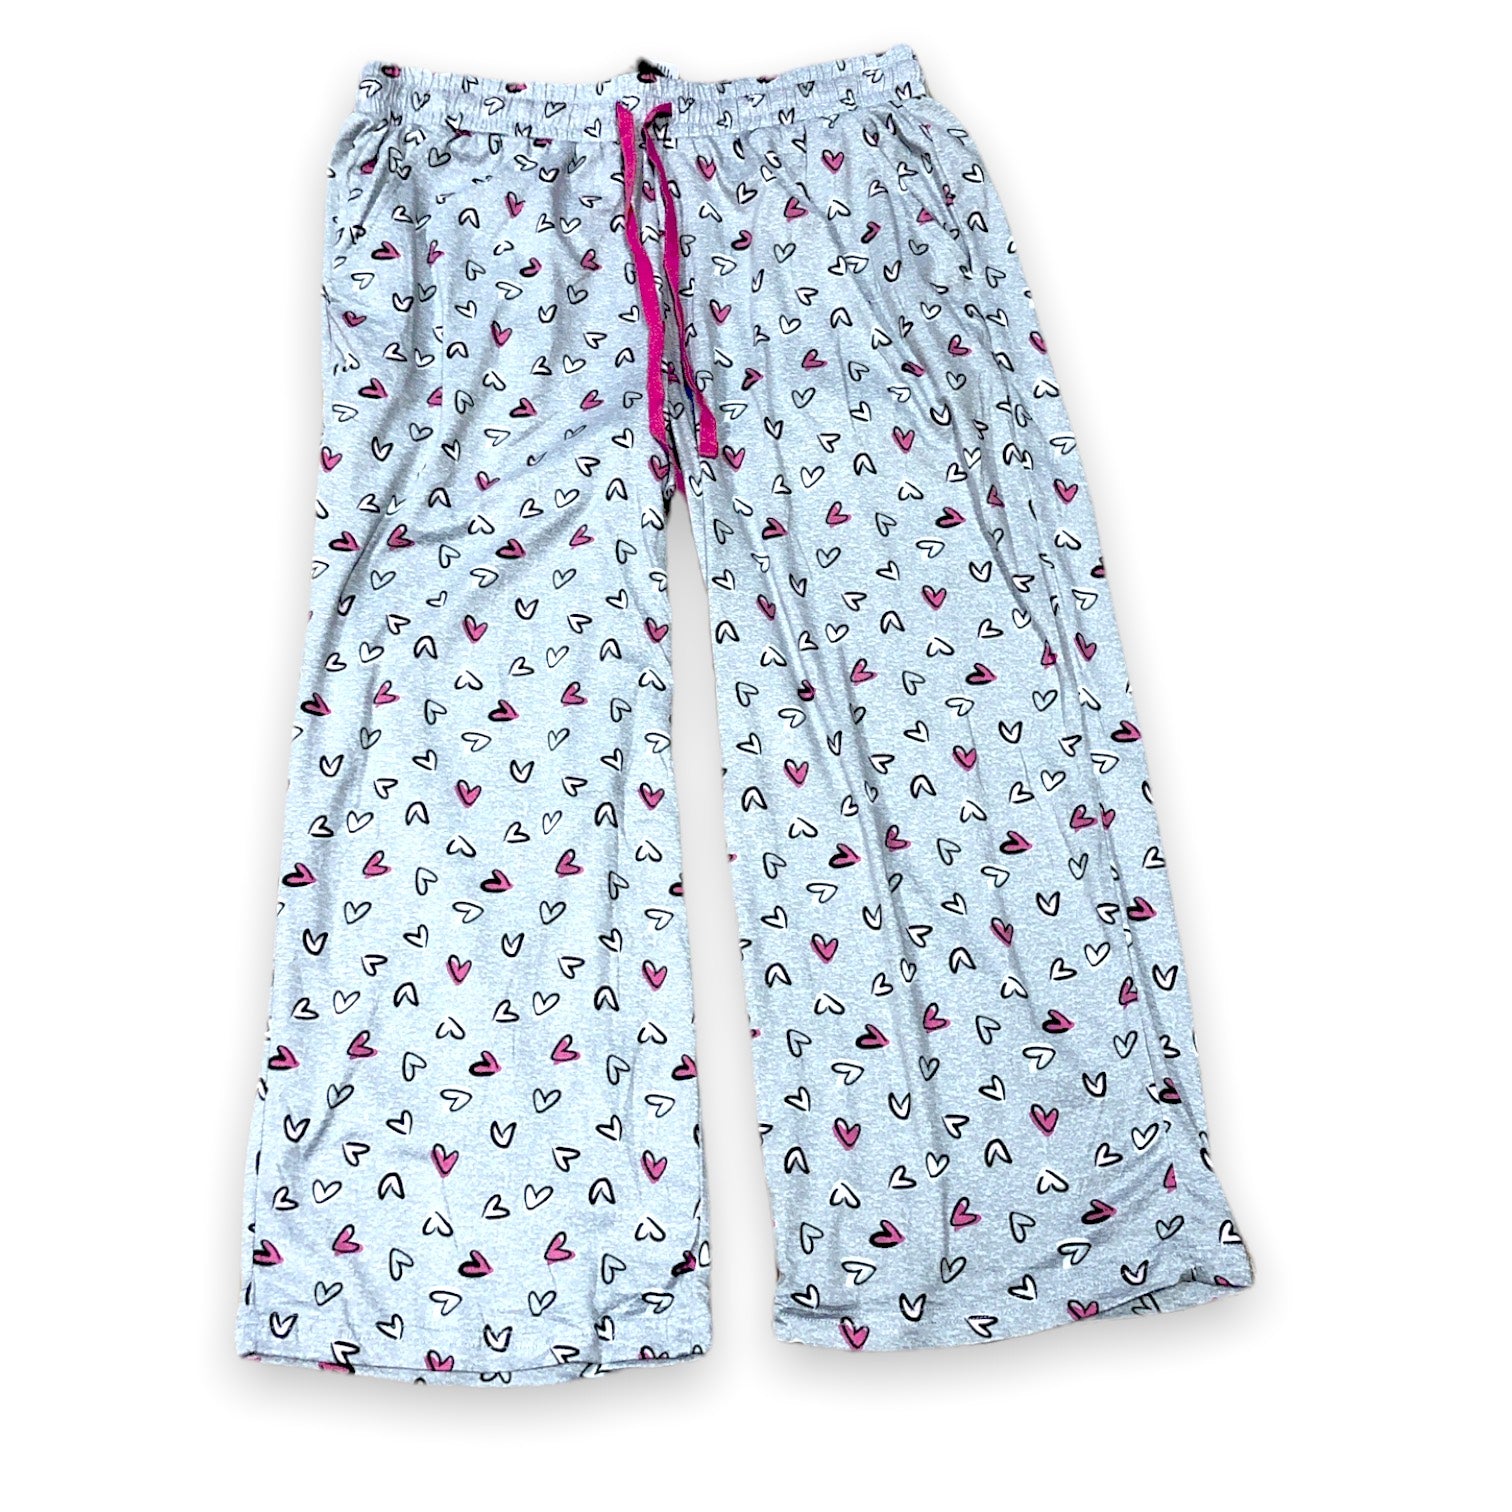 BULK BUY - Women's Peached Jersey Knit Open Leg Sleep Pants (6-Pack)